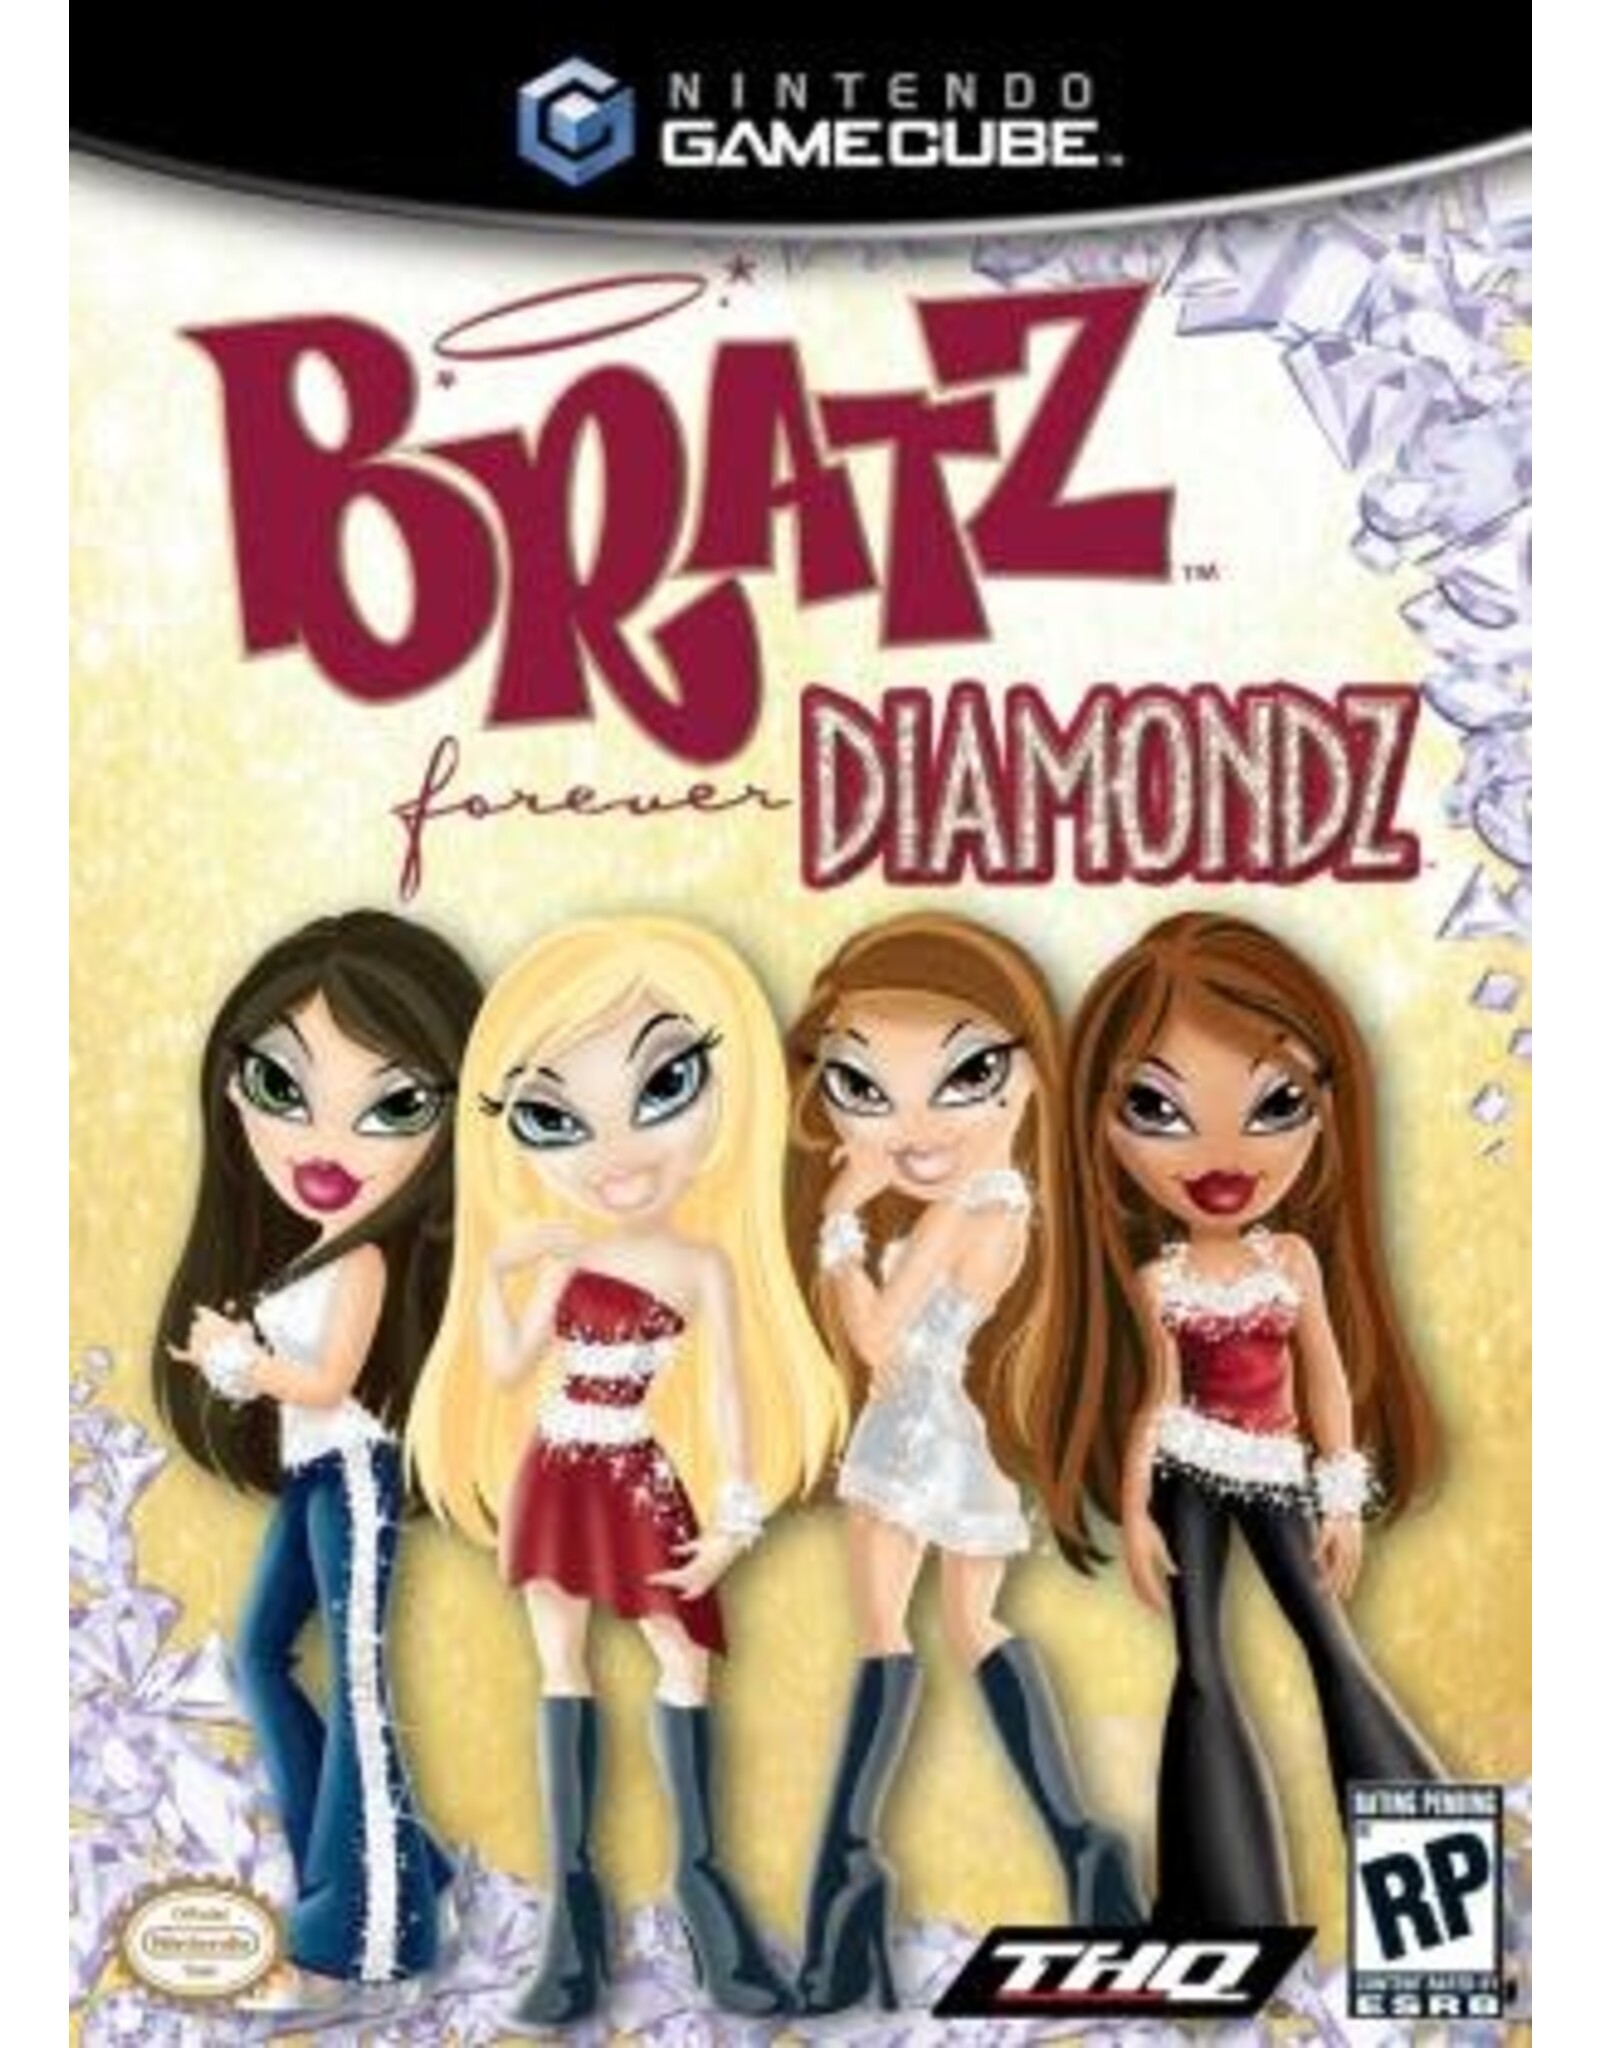 Gamecube Bratz Forever Diamondz (CiB, Includes Sealed Doll Outfit)